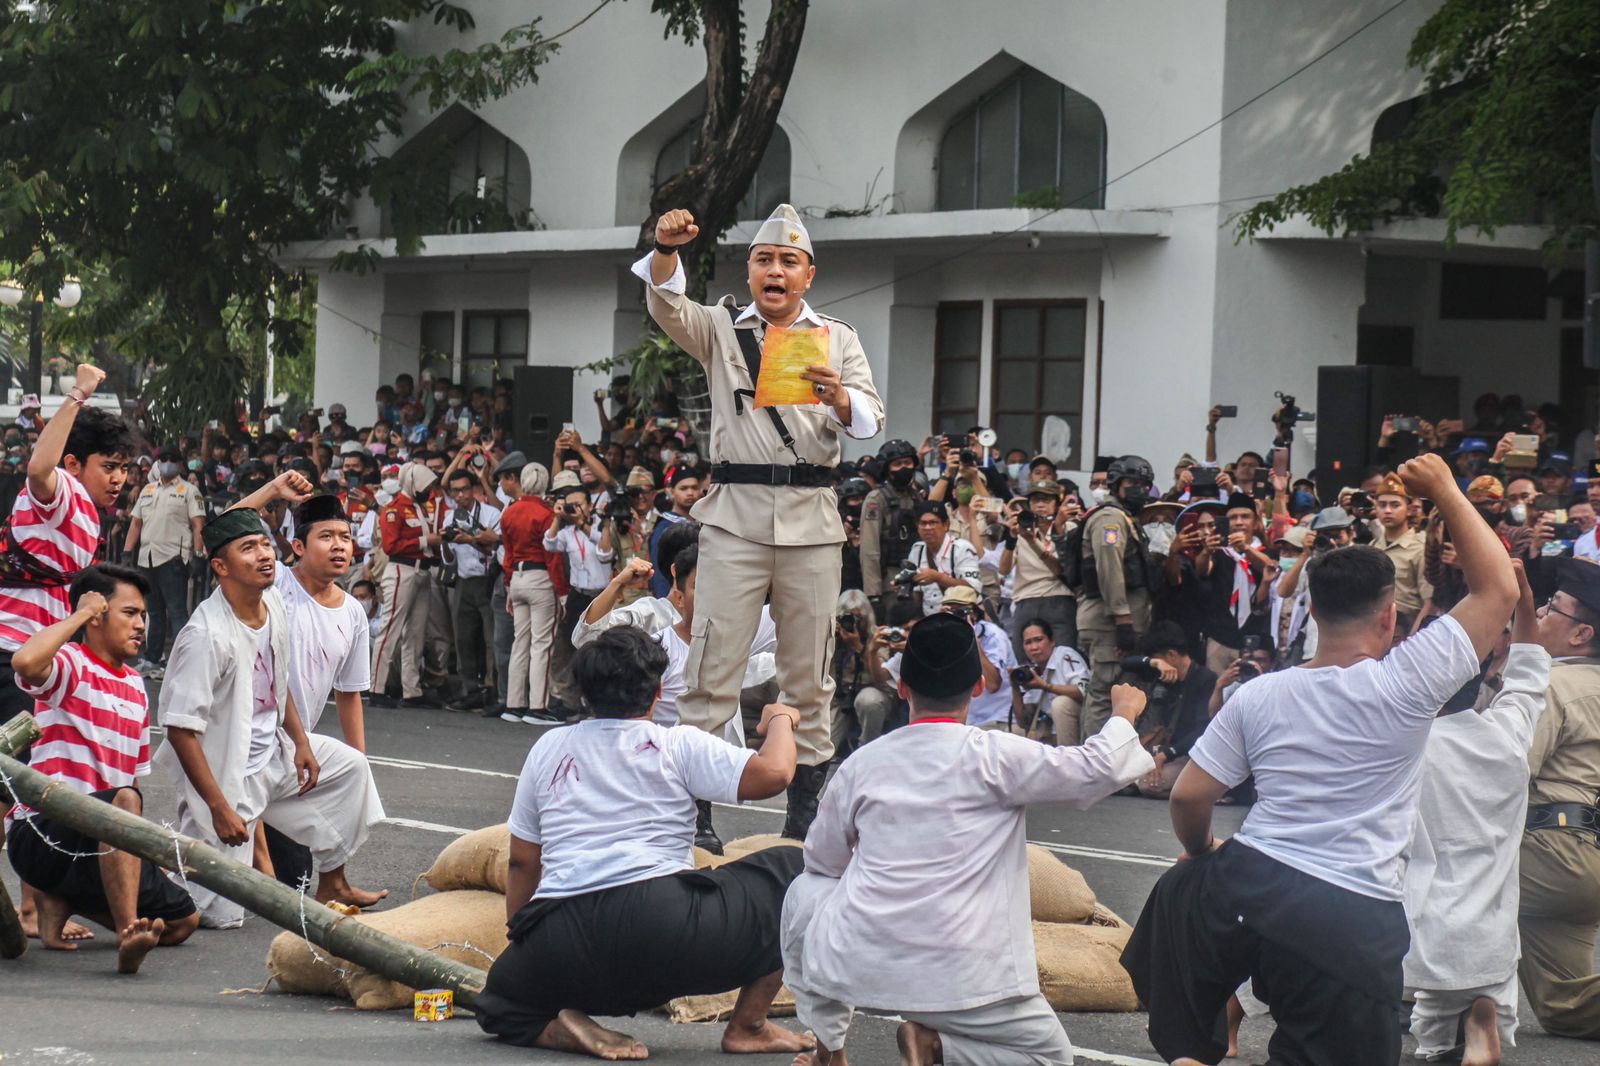 ri Cahyadi Wali Kota Surabaya memerankan Bung Tomo Pahlawan Surabaya dalam pertempuran bersejarah 10 November.